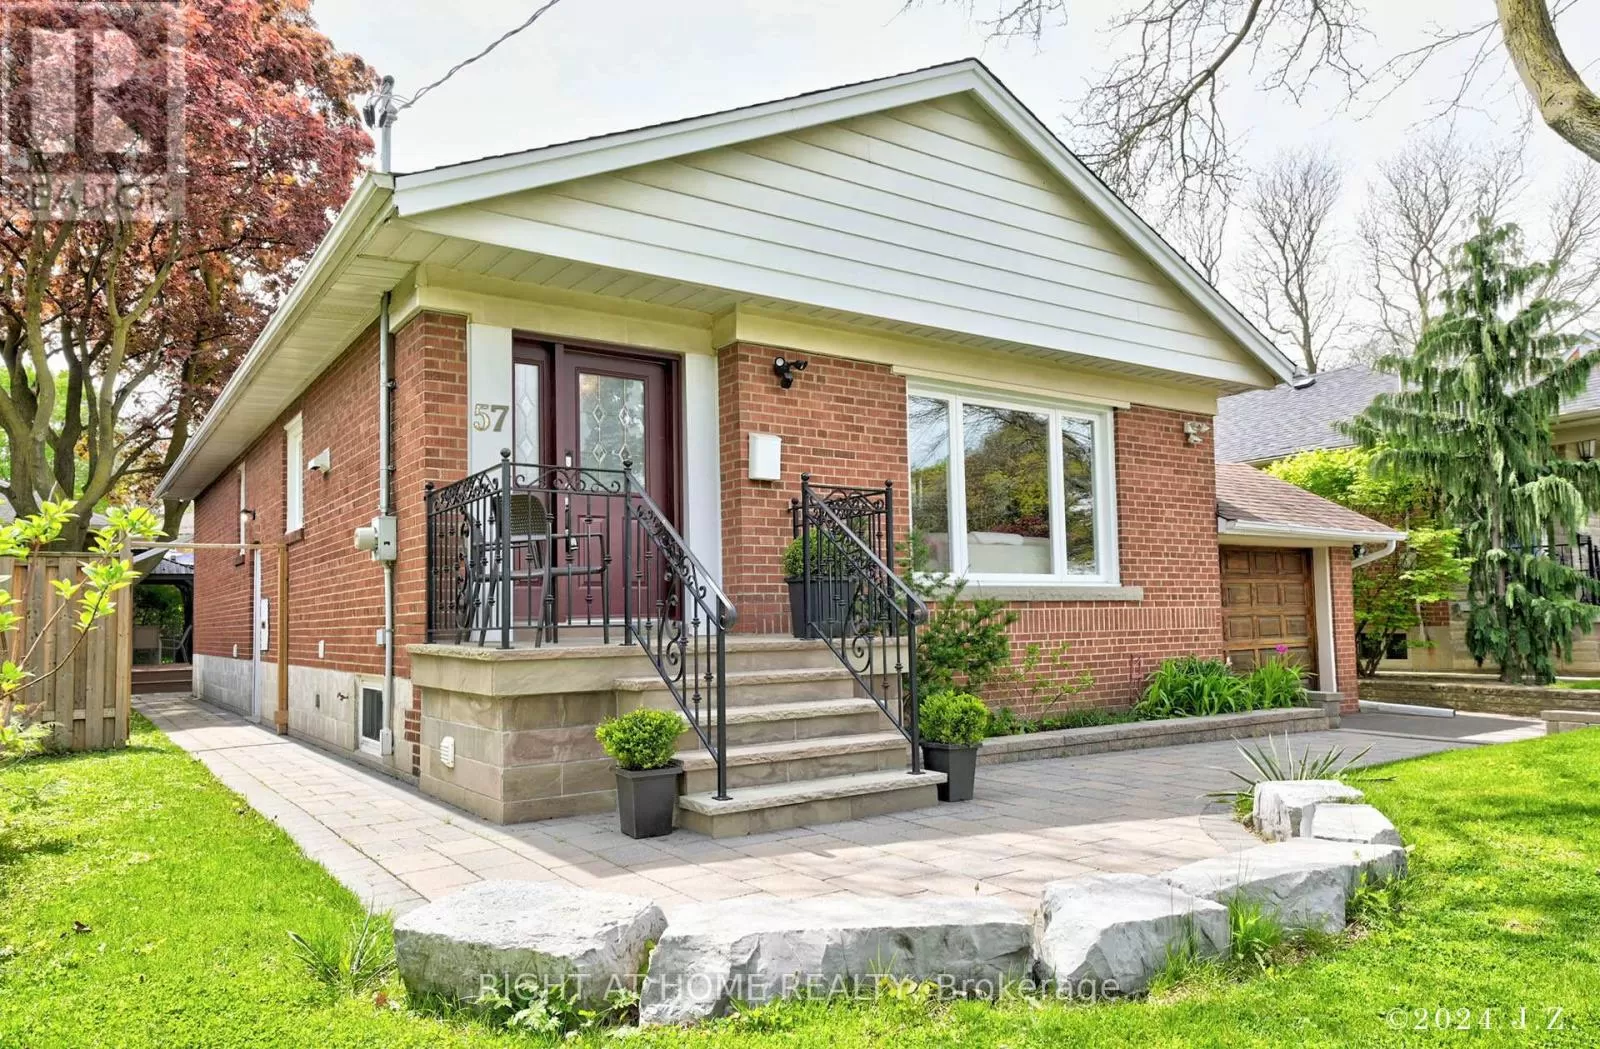 House for rent: 57 Beaverbrook Avenue, Toronto, Ontario M9B 2N5